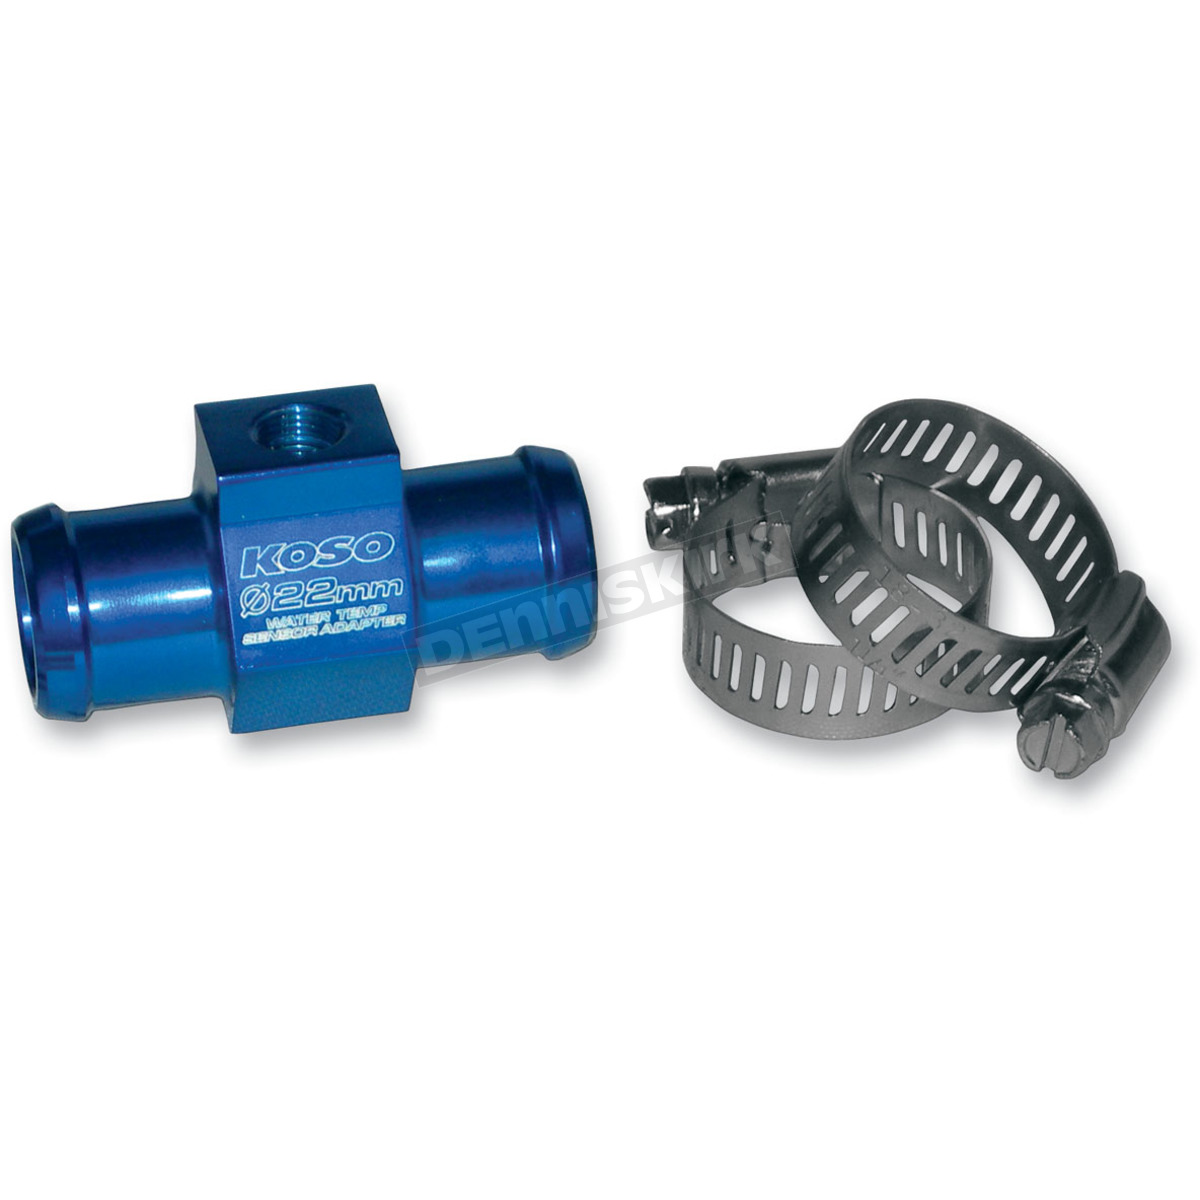 Keenso Aluminum Water Temp Meter Gauge Joint Pipe Radiator Sensor Adaptor with 2 Clamps 22mm Motorcycle Water Temperature Sensor Adapter 